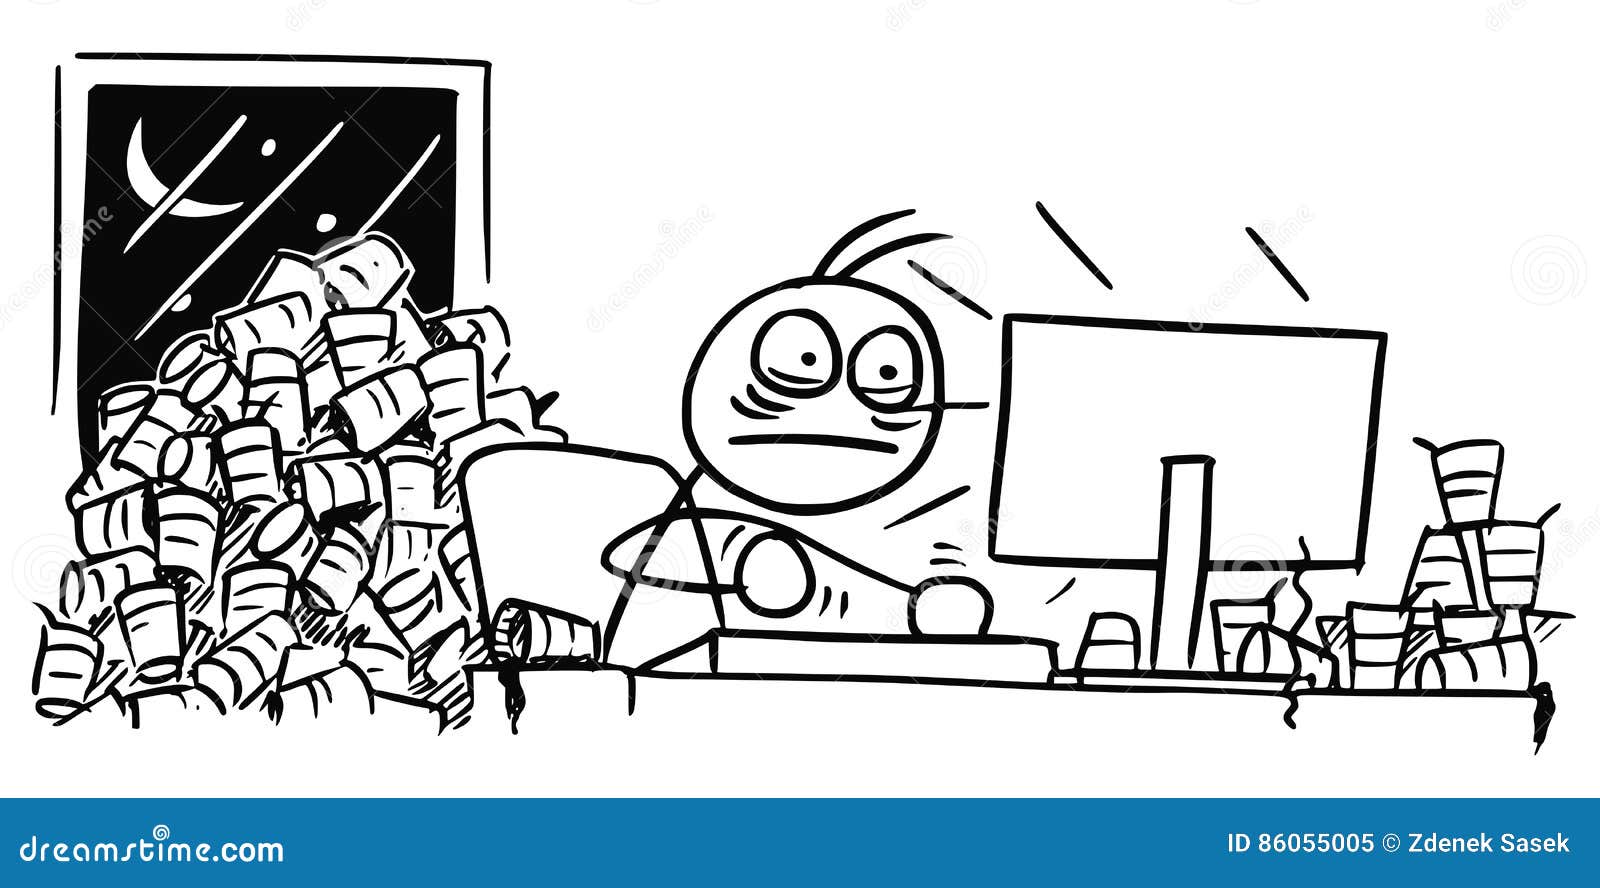 cartoon of man working on computer overnight and drinkig coffee